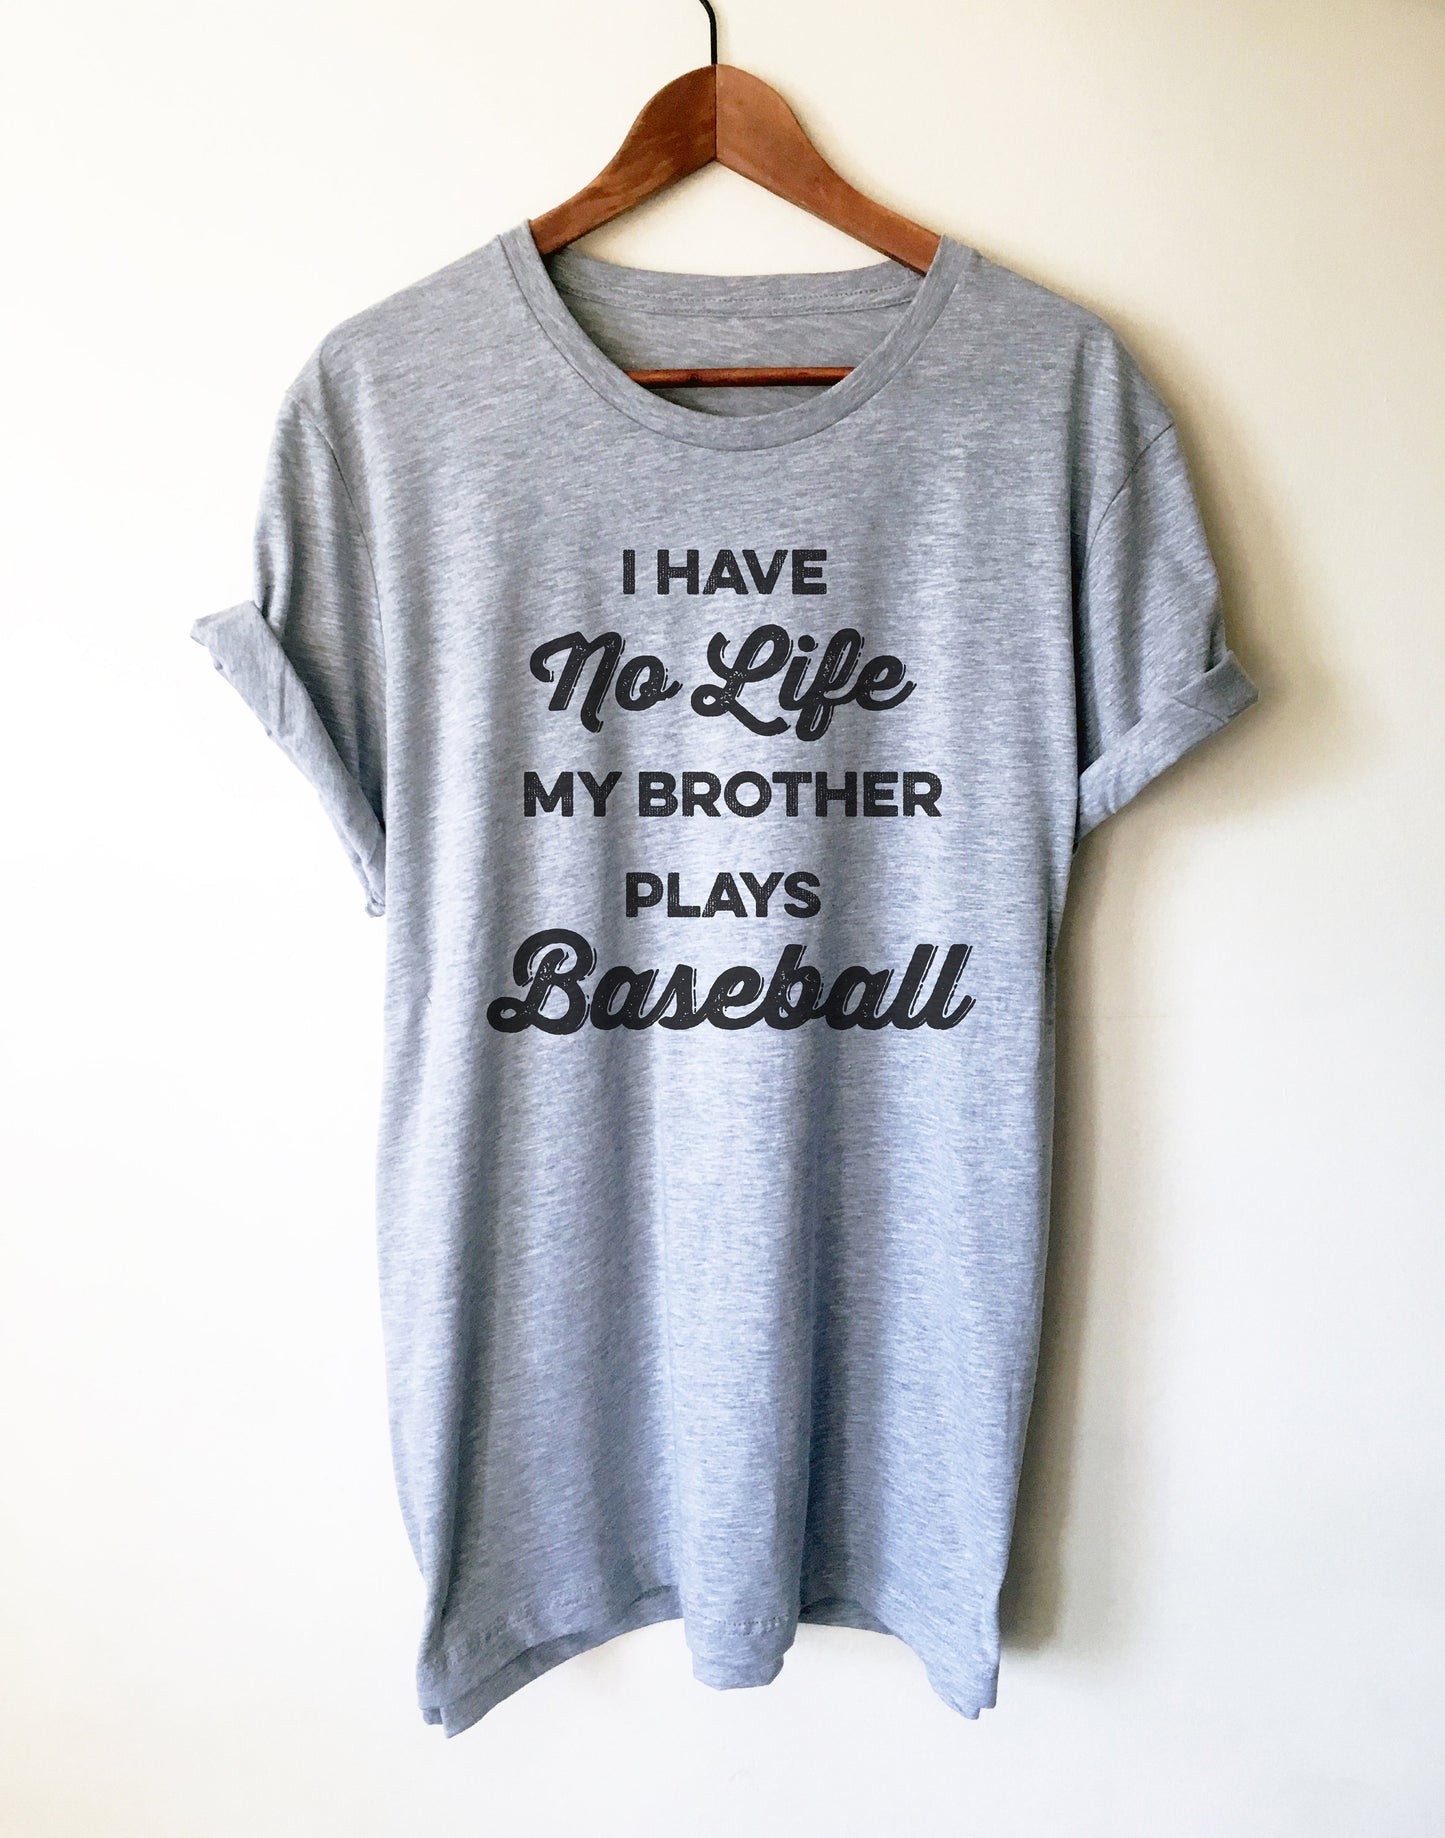 I Have No Life My Brother Plays Baseball Unisex Shirt - Baseball Shirt, Baseball Gift, Baseball Sister, Baseball Brother, Game Day Shirt